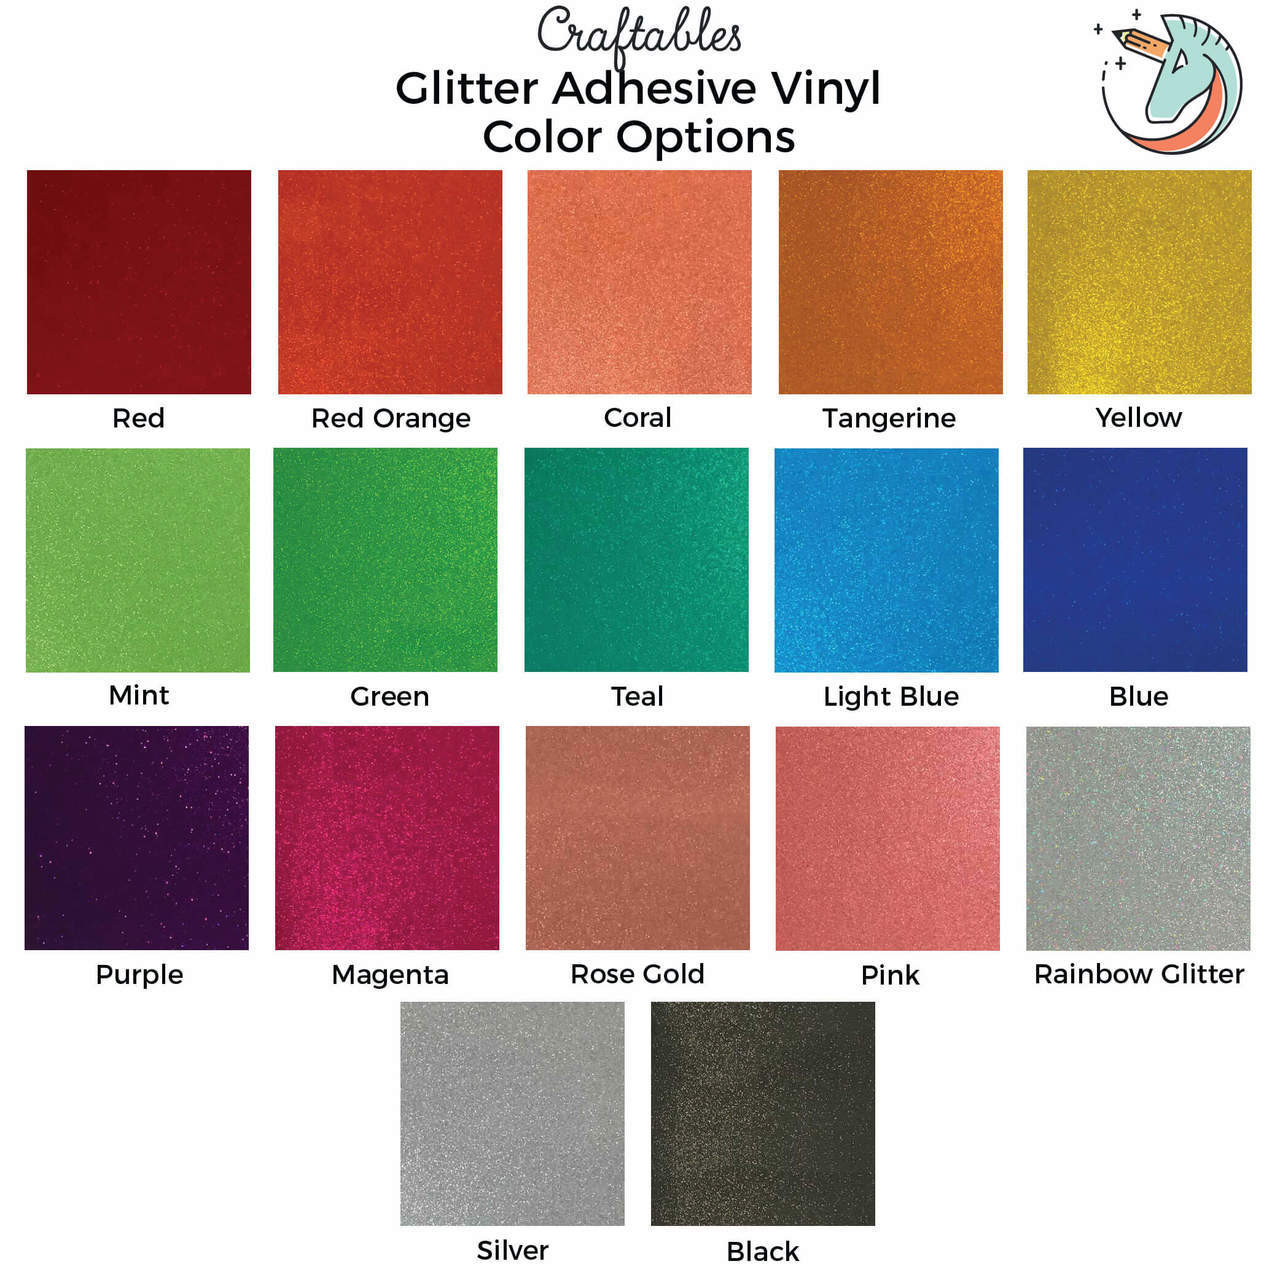 Blue Glitter Adhesive Vinyl Rolls By Craftables